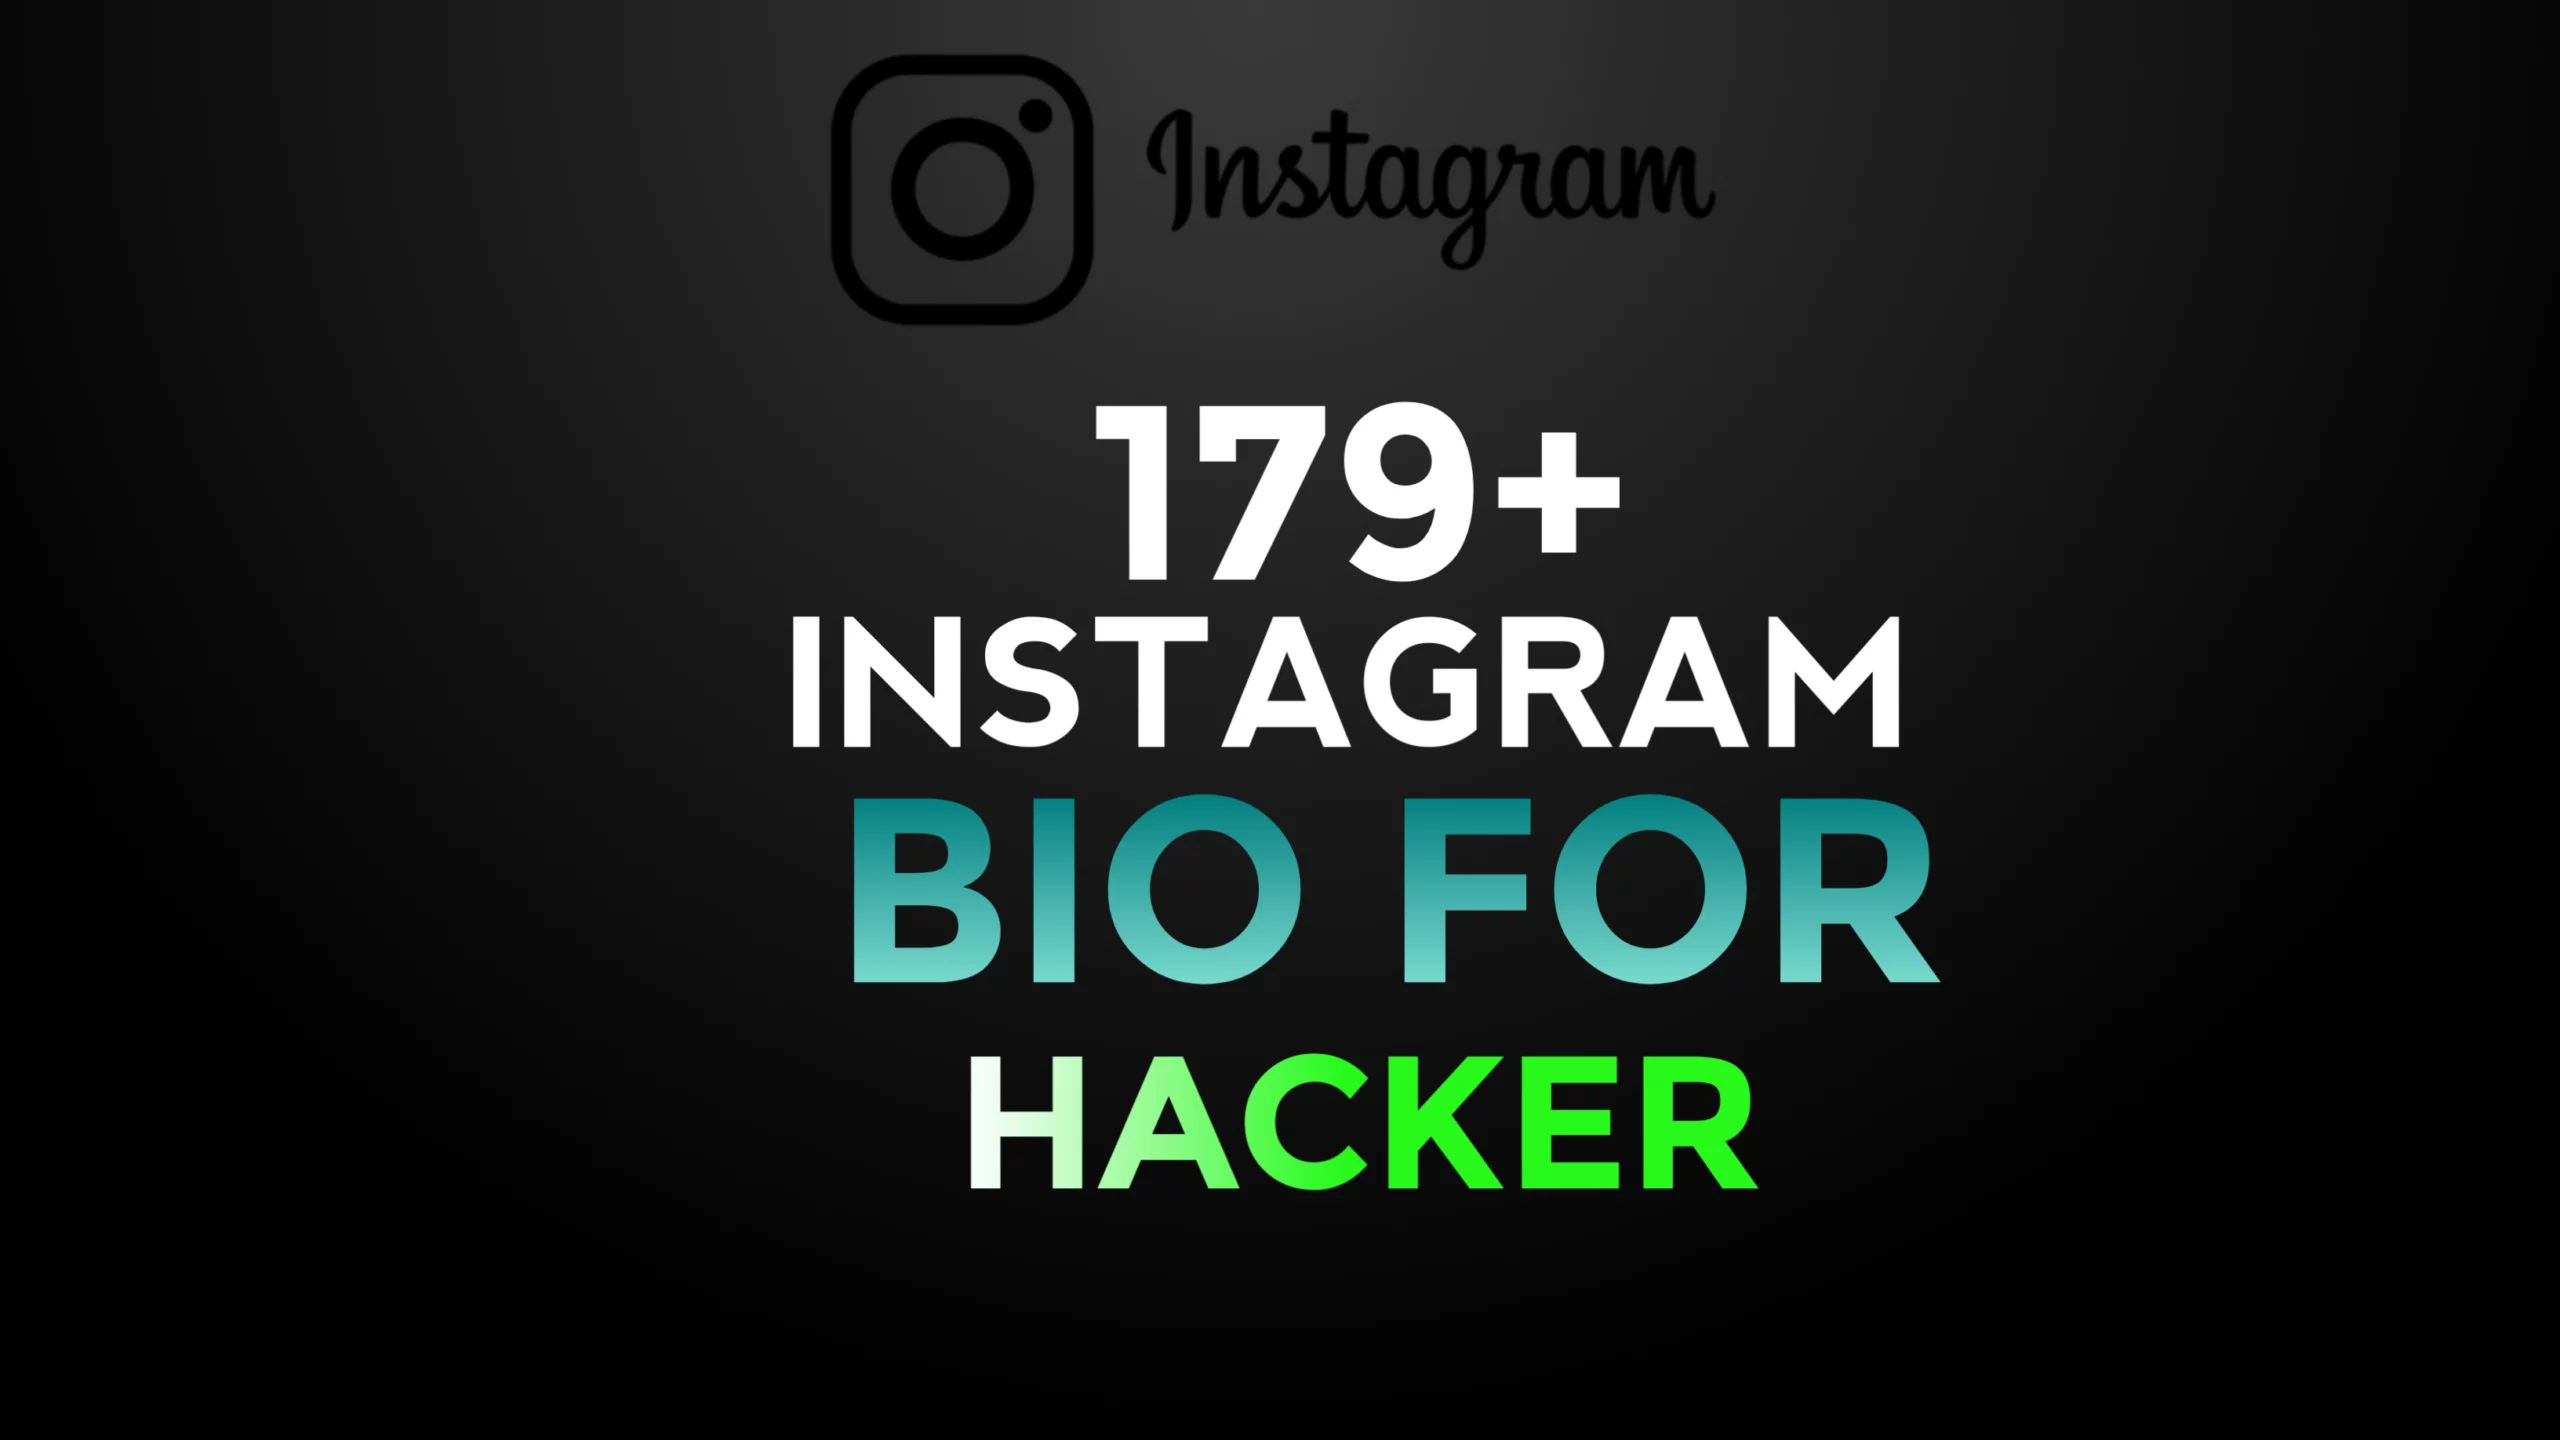 179+ Hacker Bio For Instagram | Cyber Security Bio For Instagram